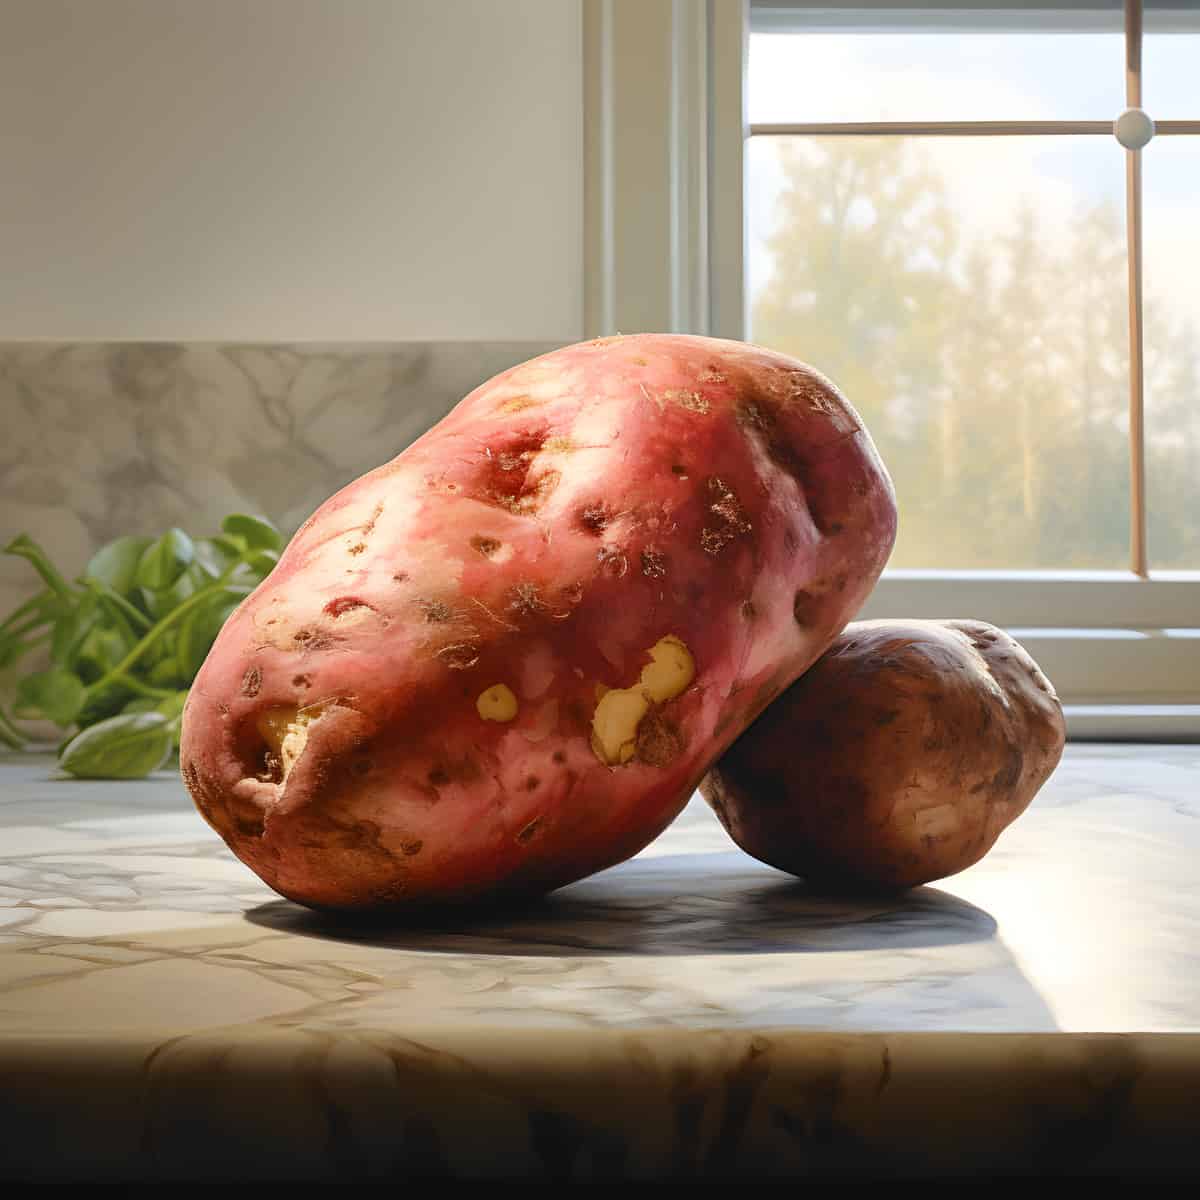 Adirondack Red Potatoes on a kitchen counter